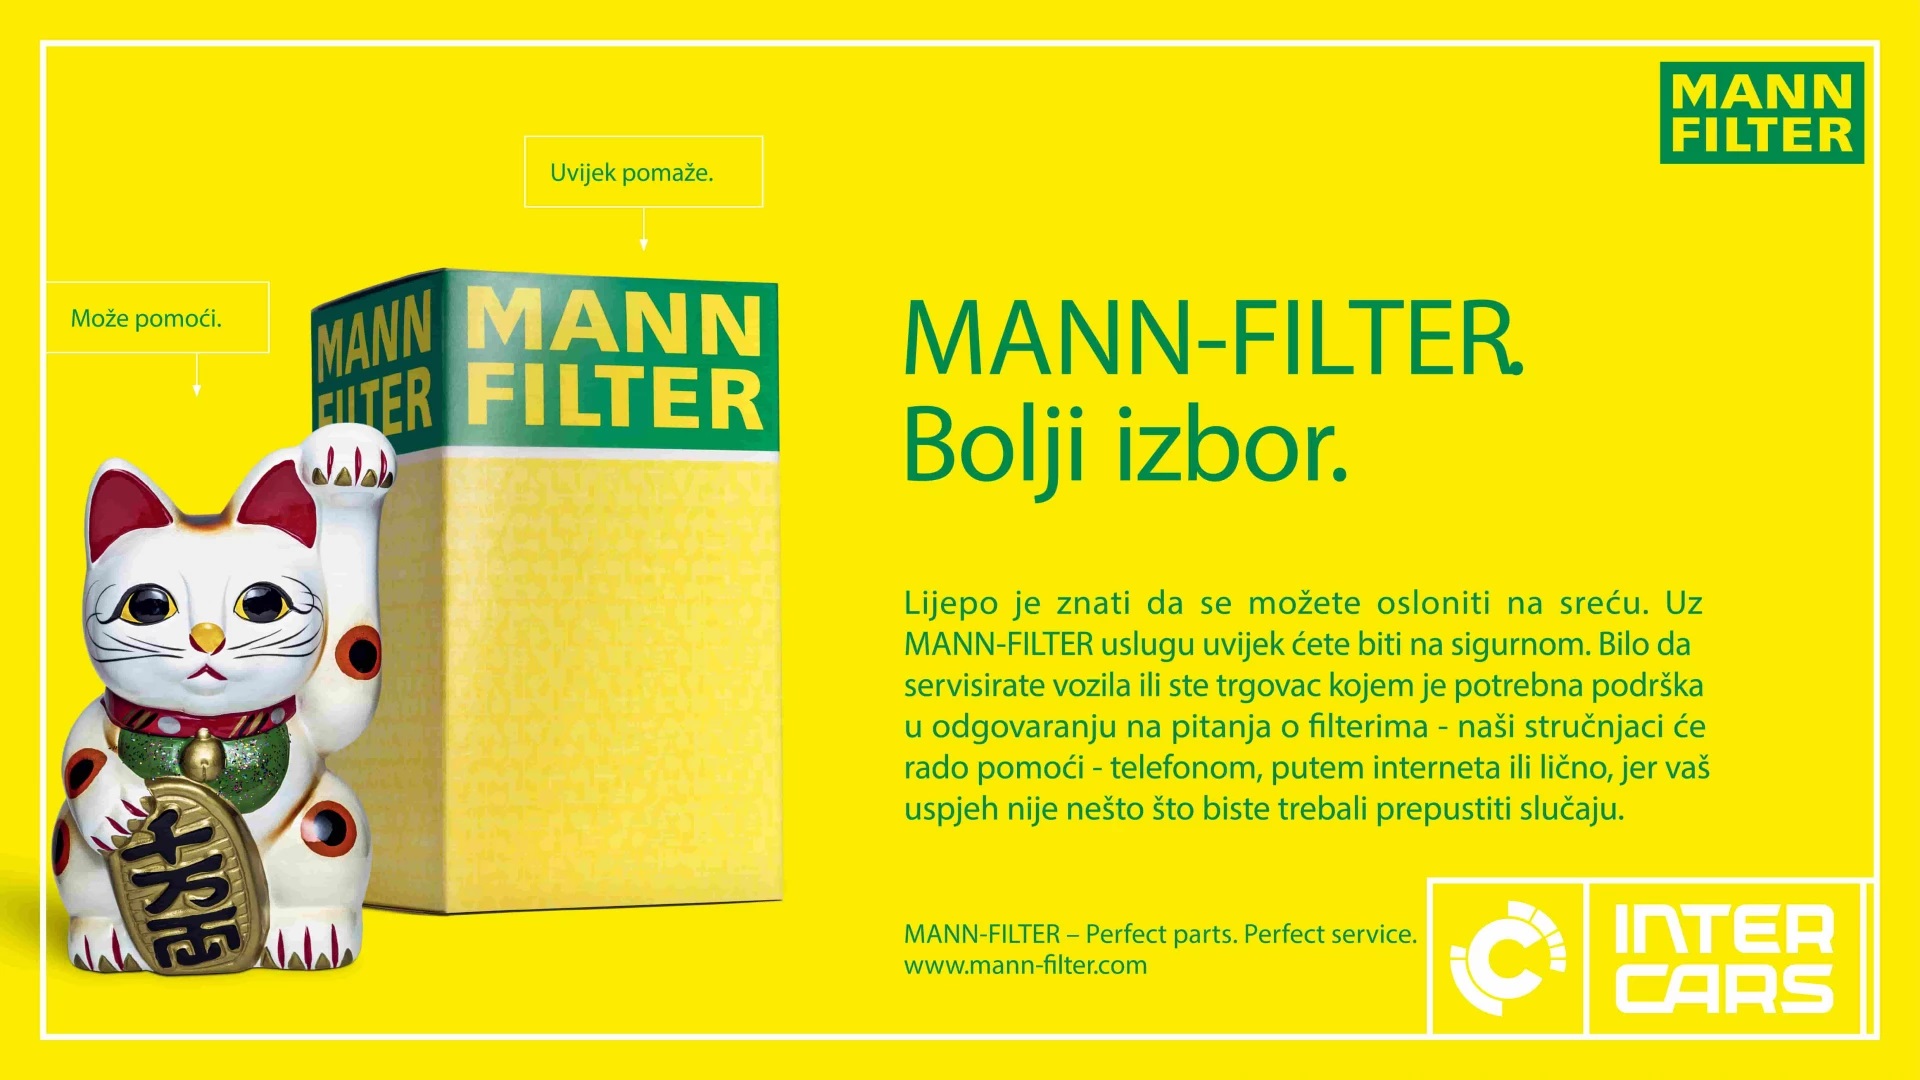 MANN-FILTER vam predstavlja svoju novu kampanju - MANN-FILTER. Bolji izbor.